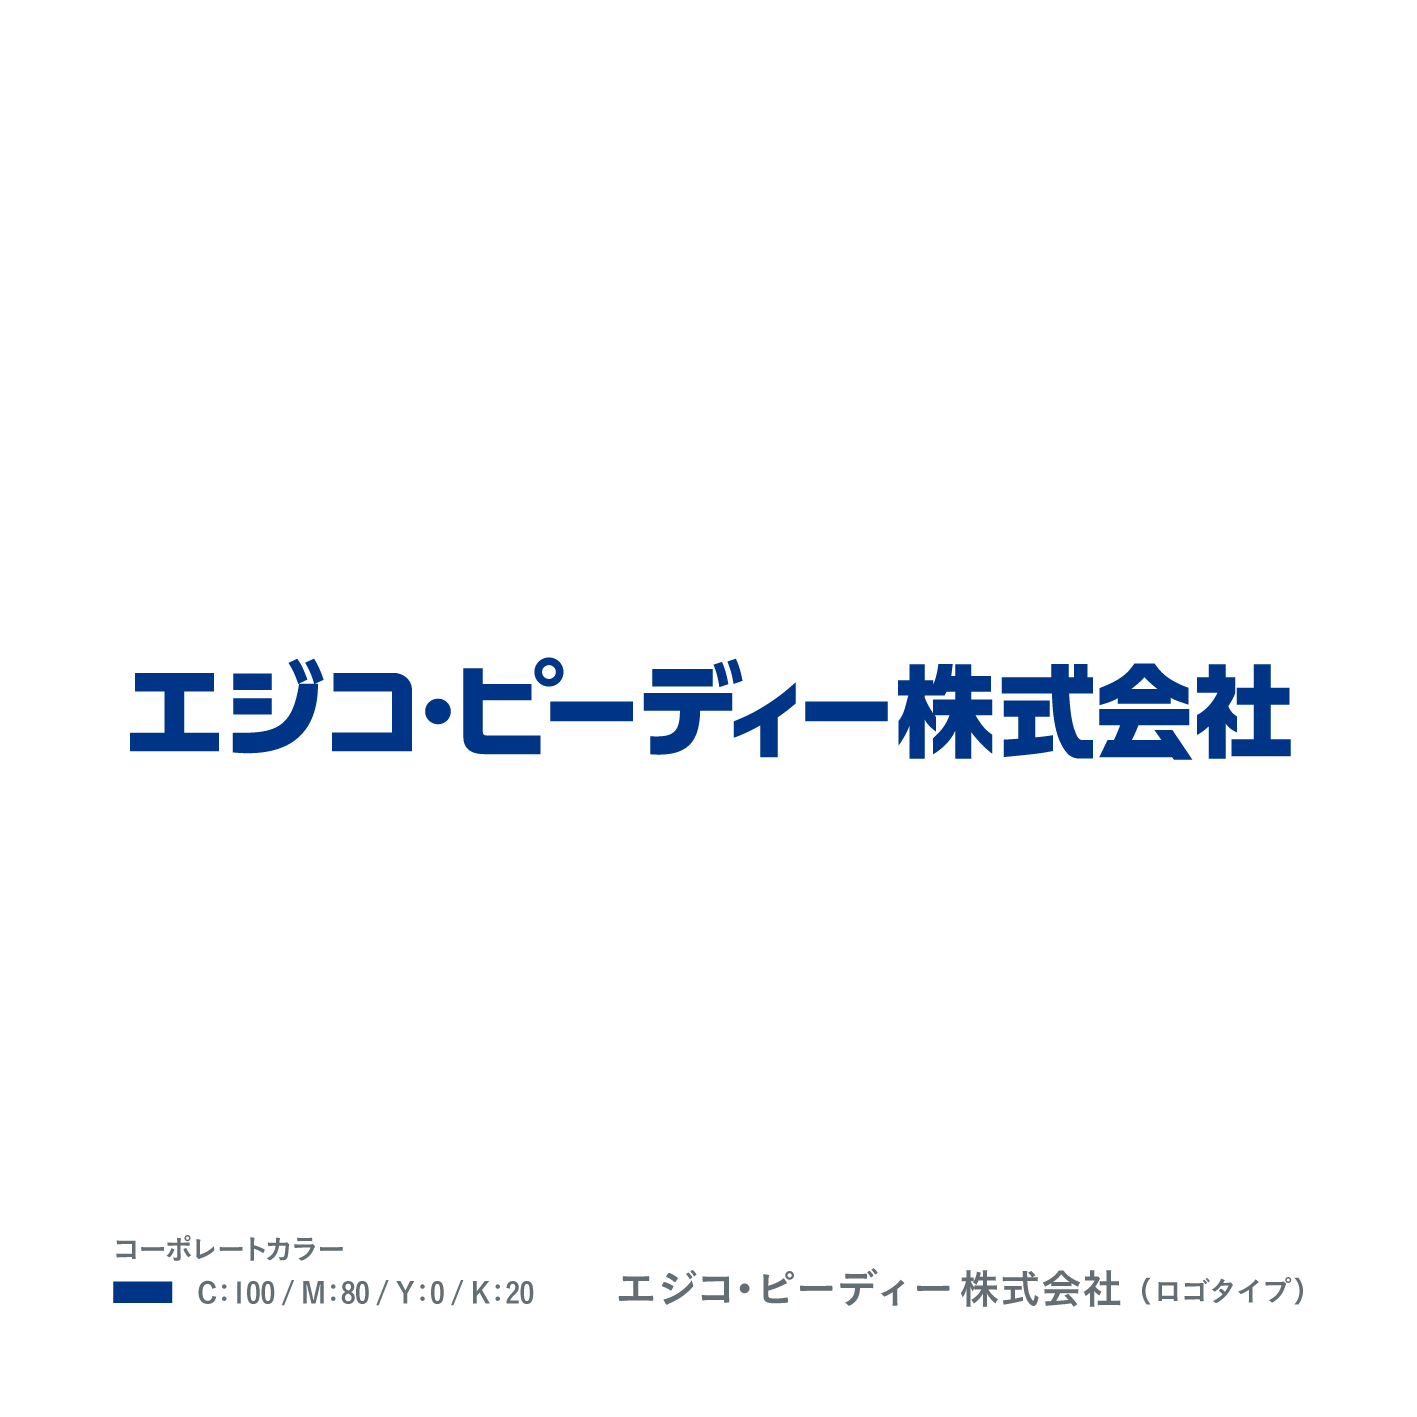 EZICO_PD_logo_01